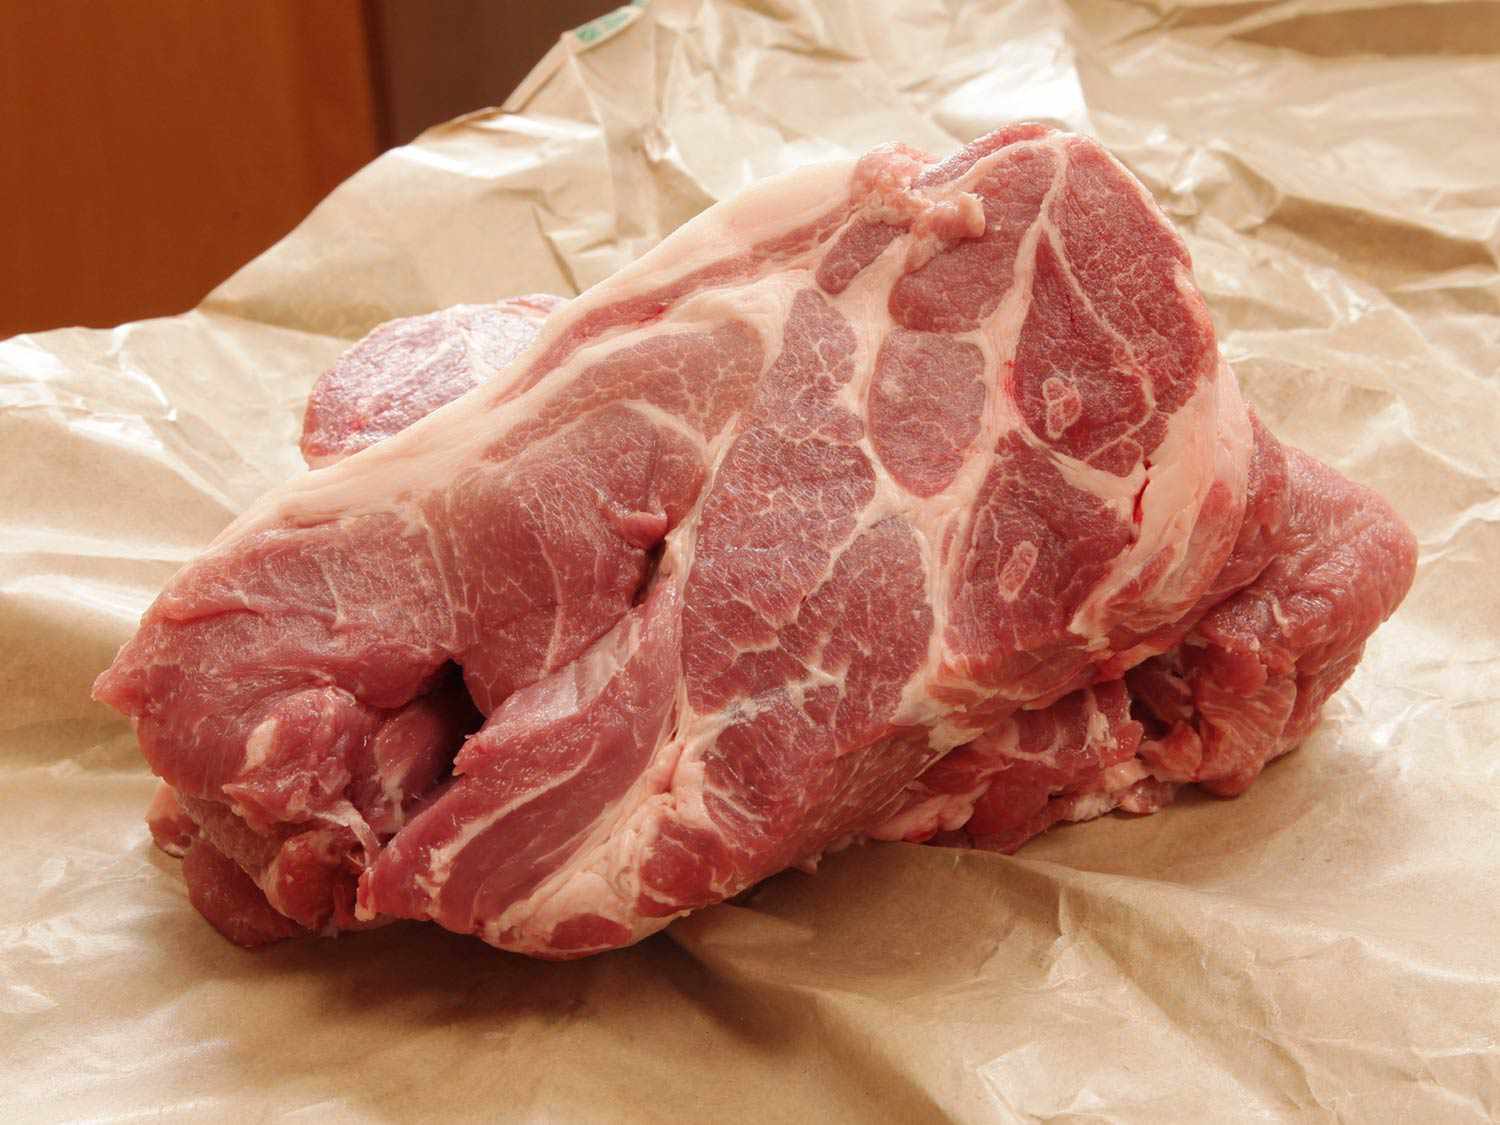 A hunk of raw pork.